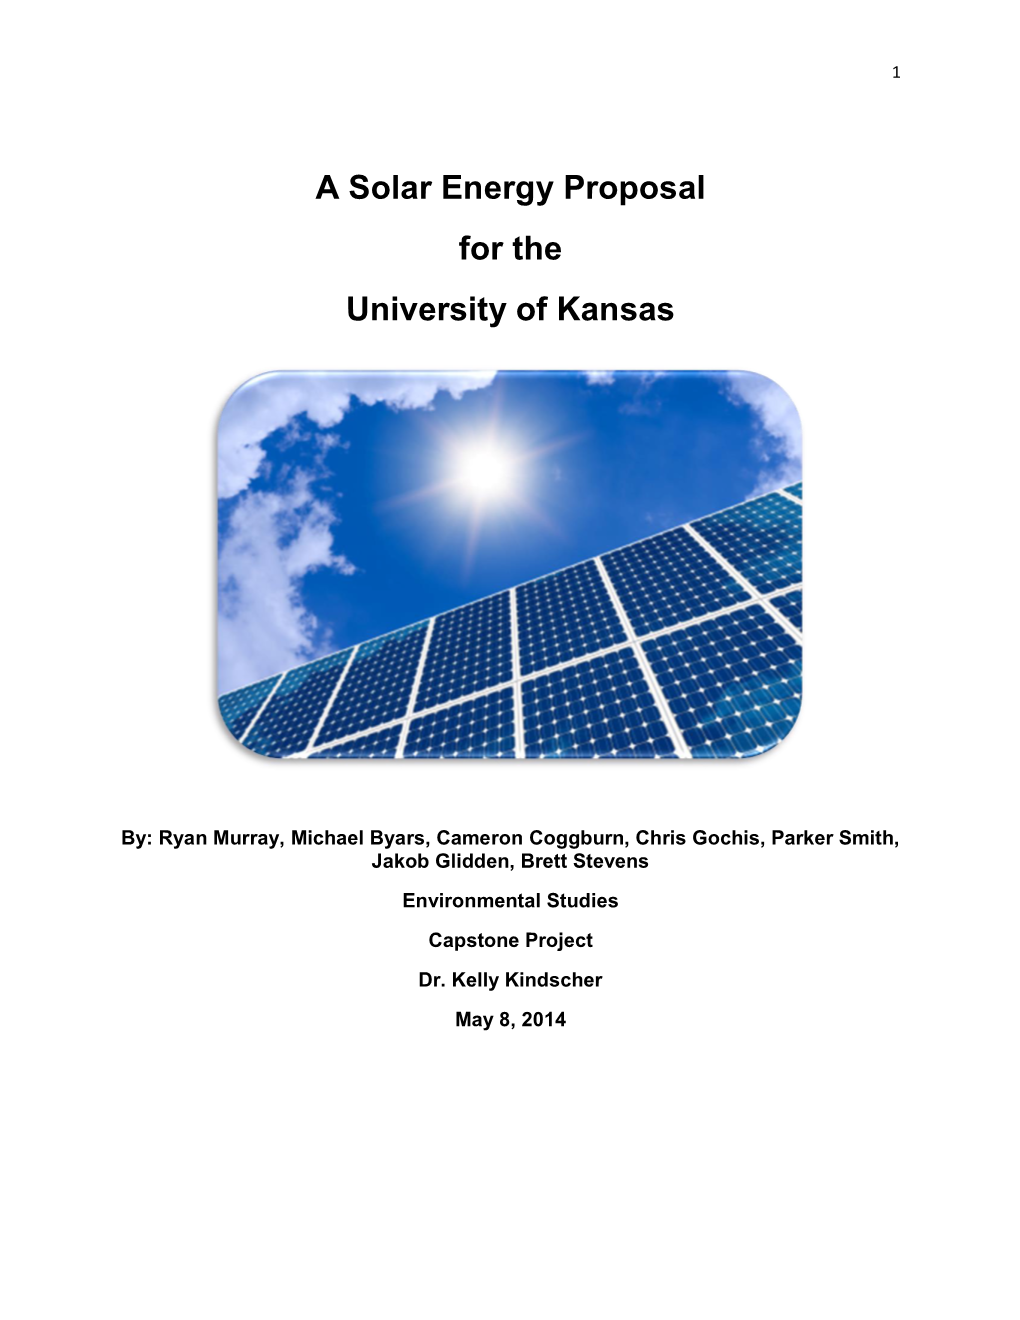 A Solar Energy Proposal for the University of Kansas